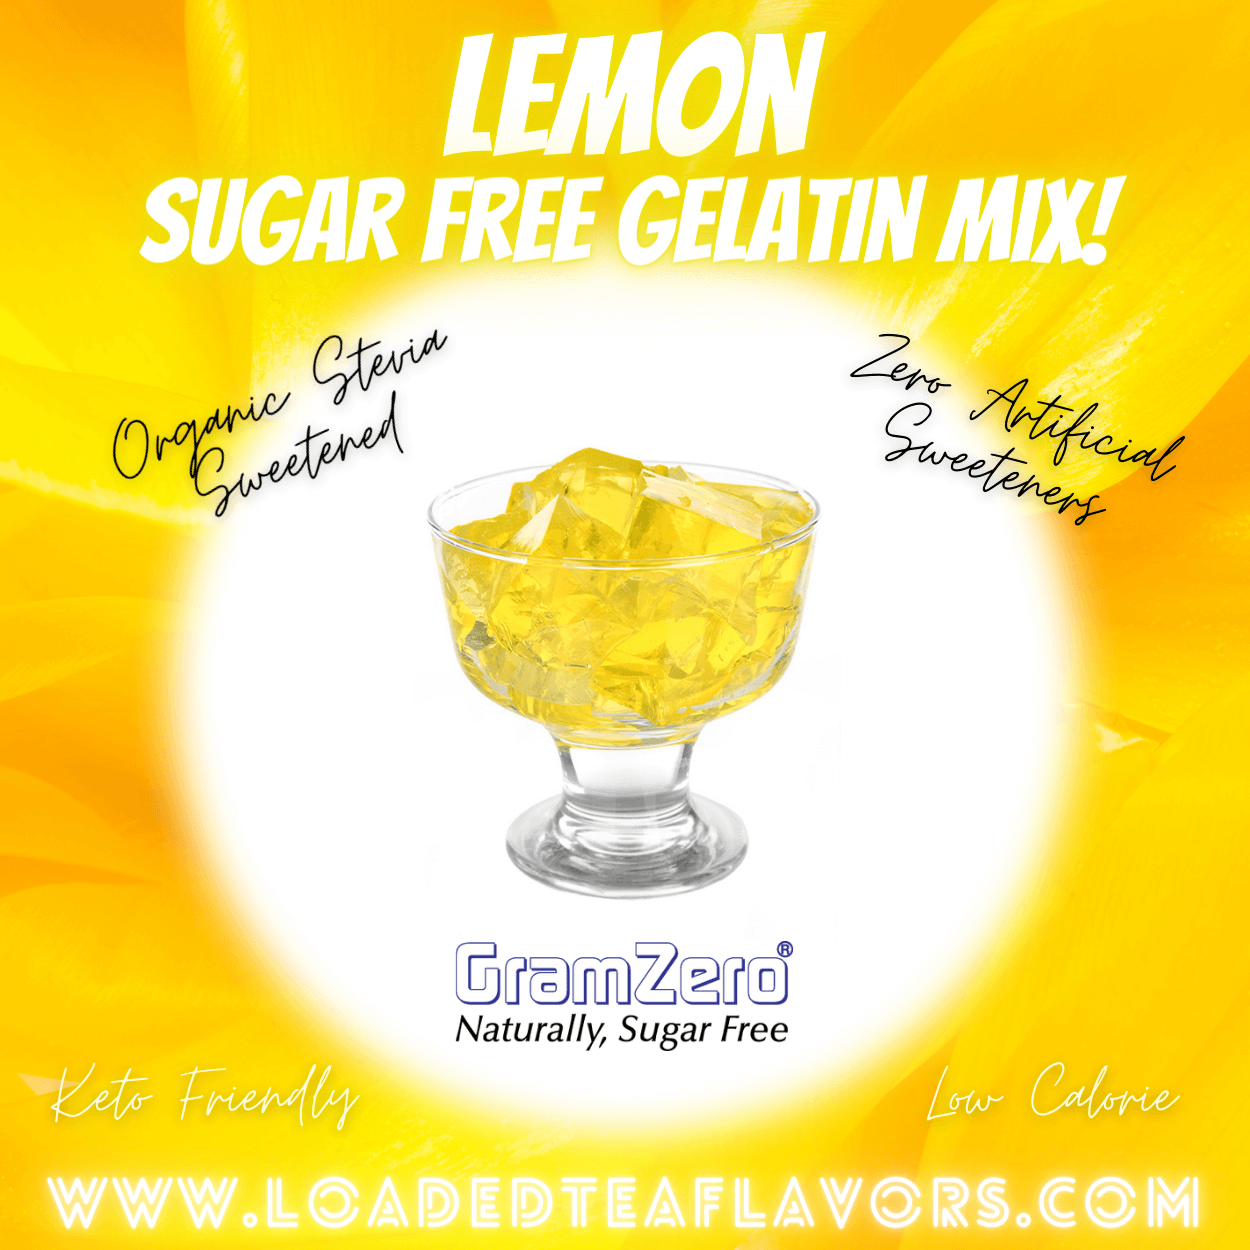 Gramzero Lemon Sugar Free Gelatin Mix Stevia Sweetened Low Calorie Keto Friendly